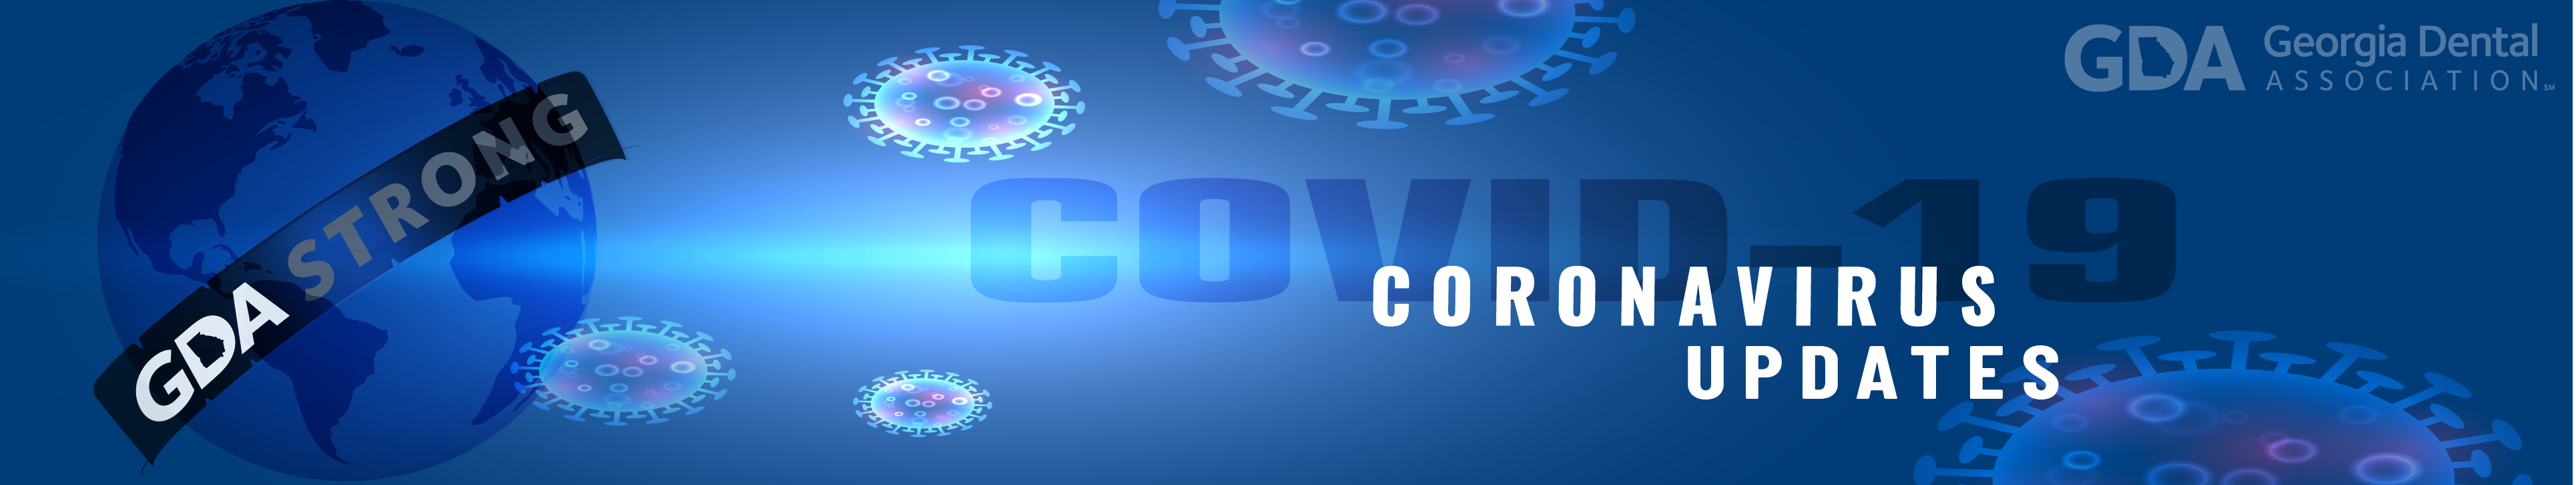 Coronavirus Updates- header for landing page